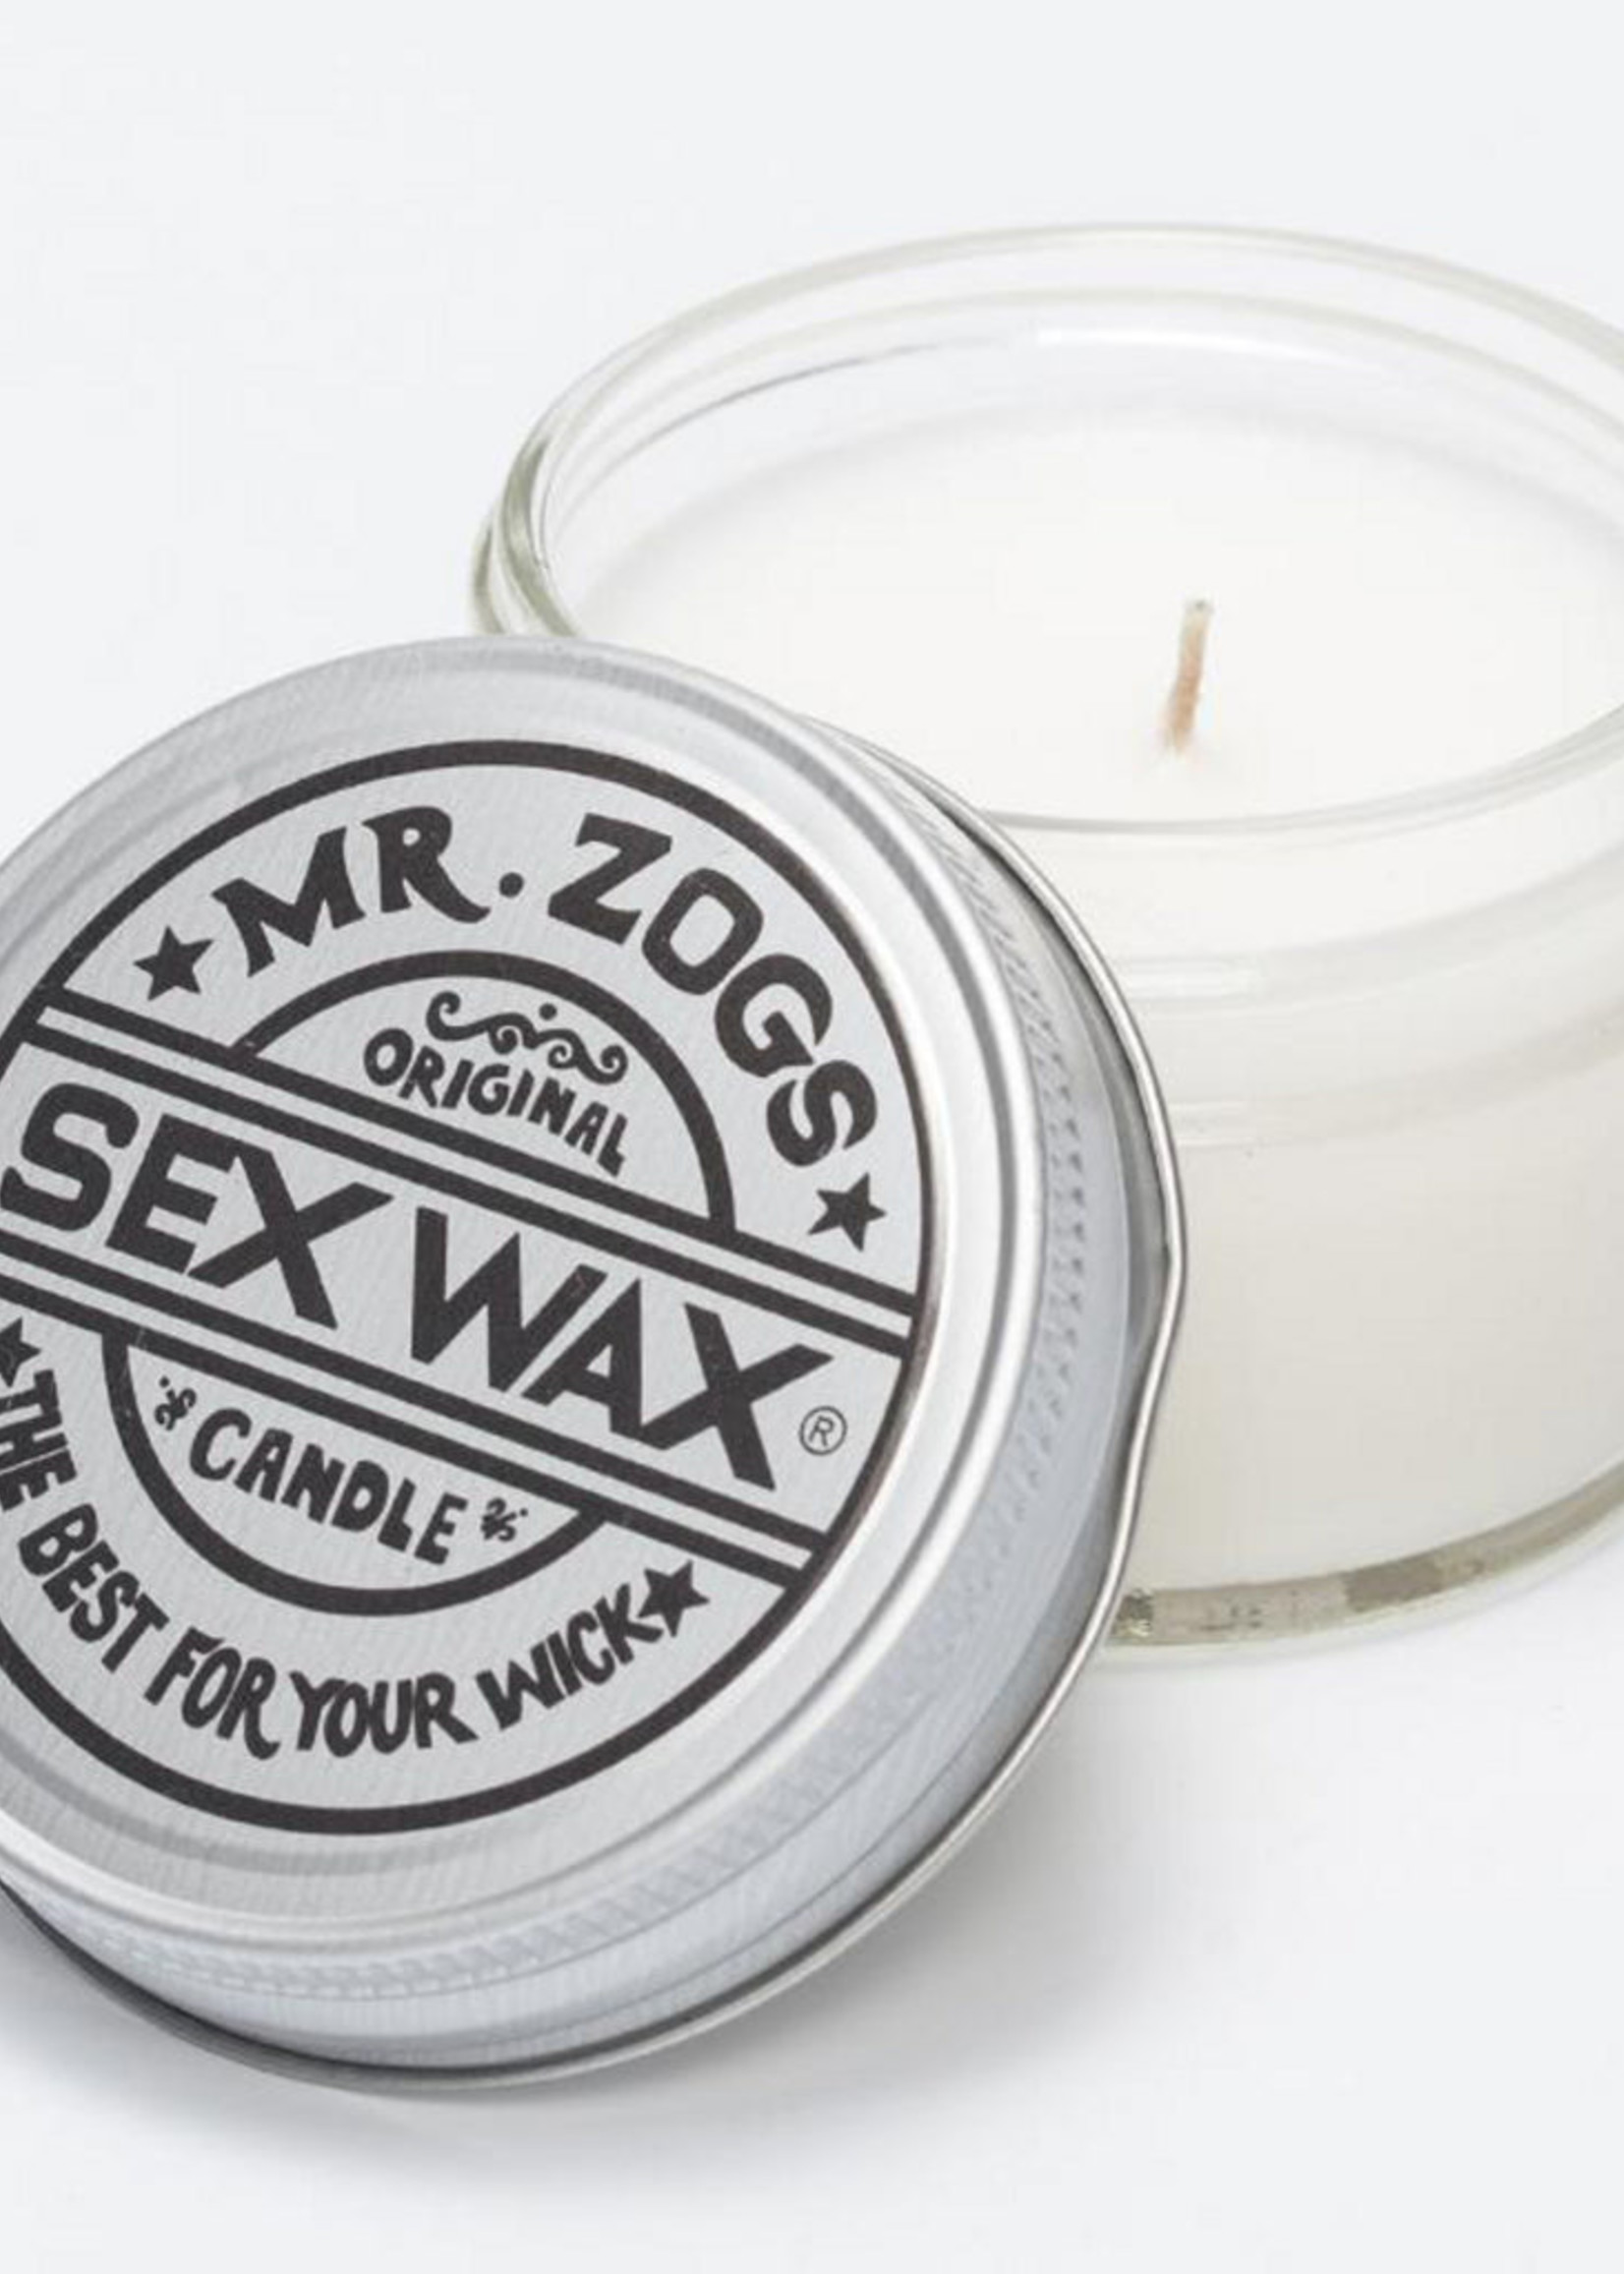 Sexwax Sexwax Candle Coconut